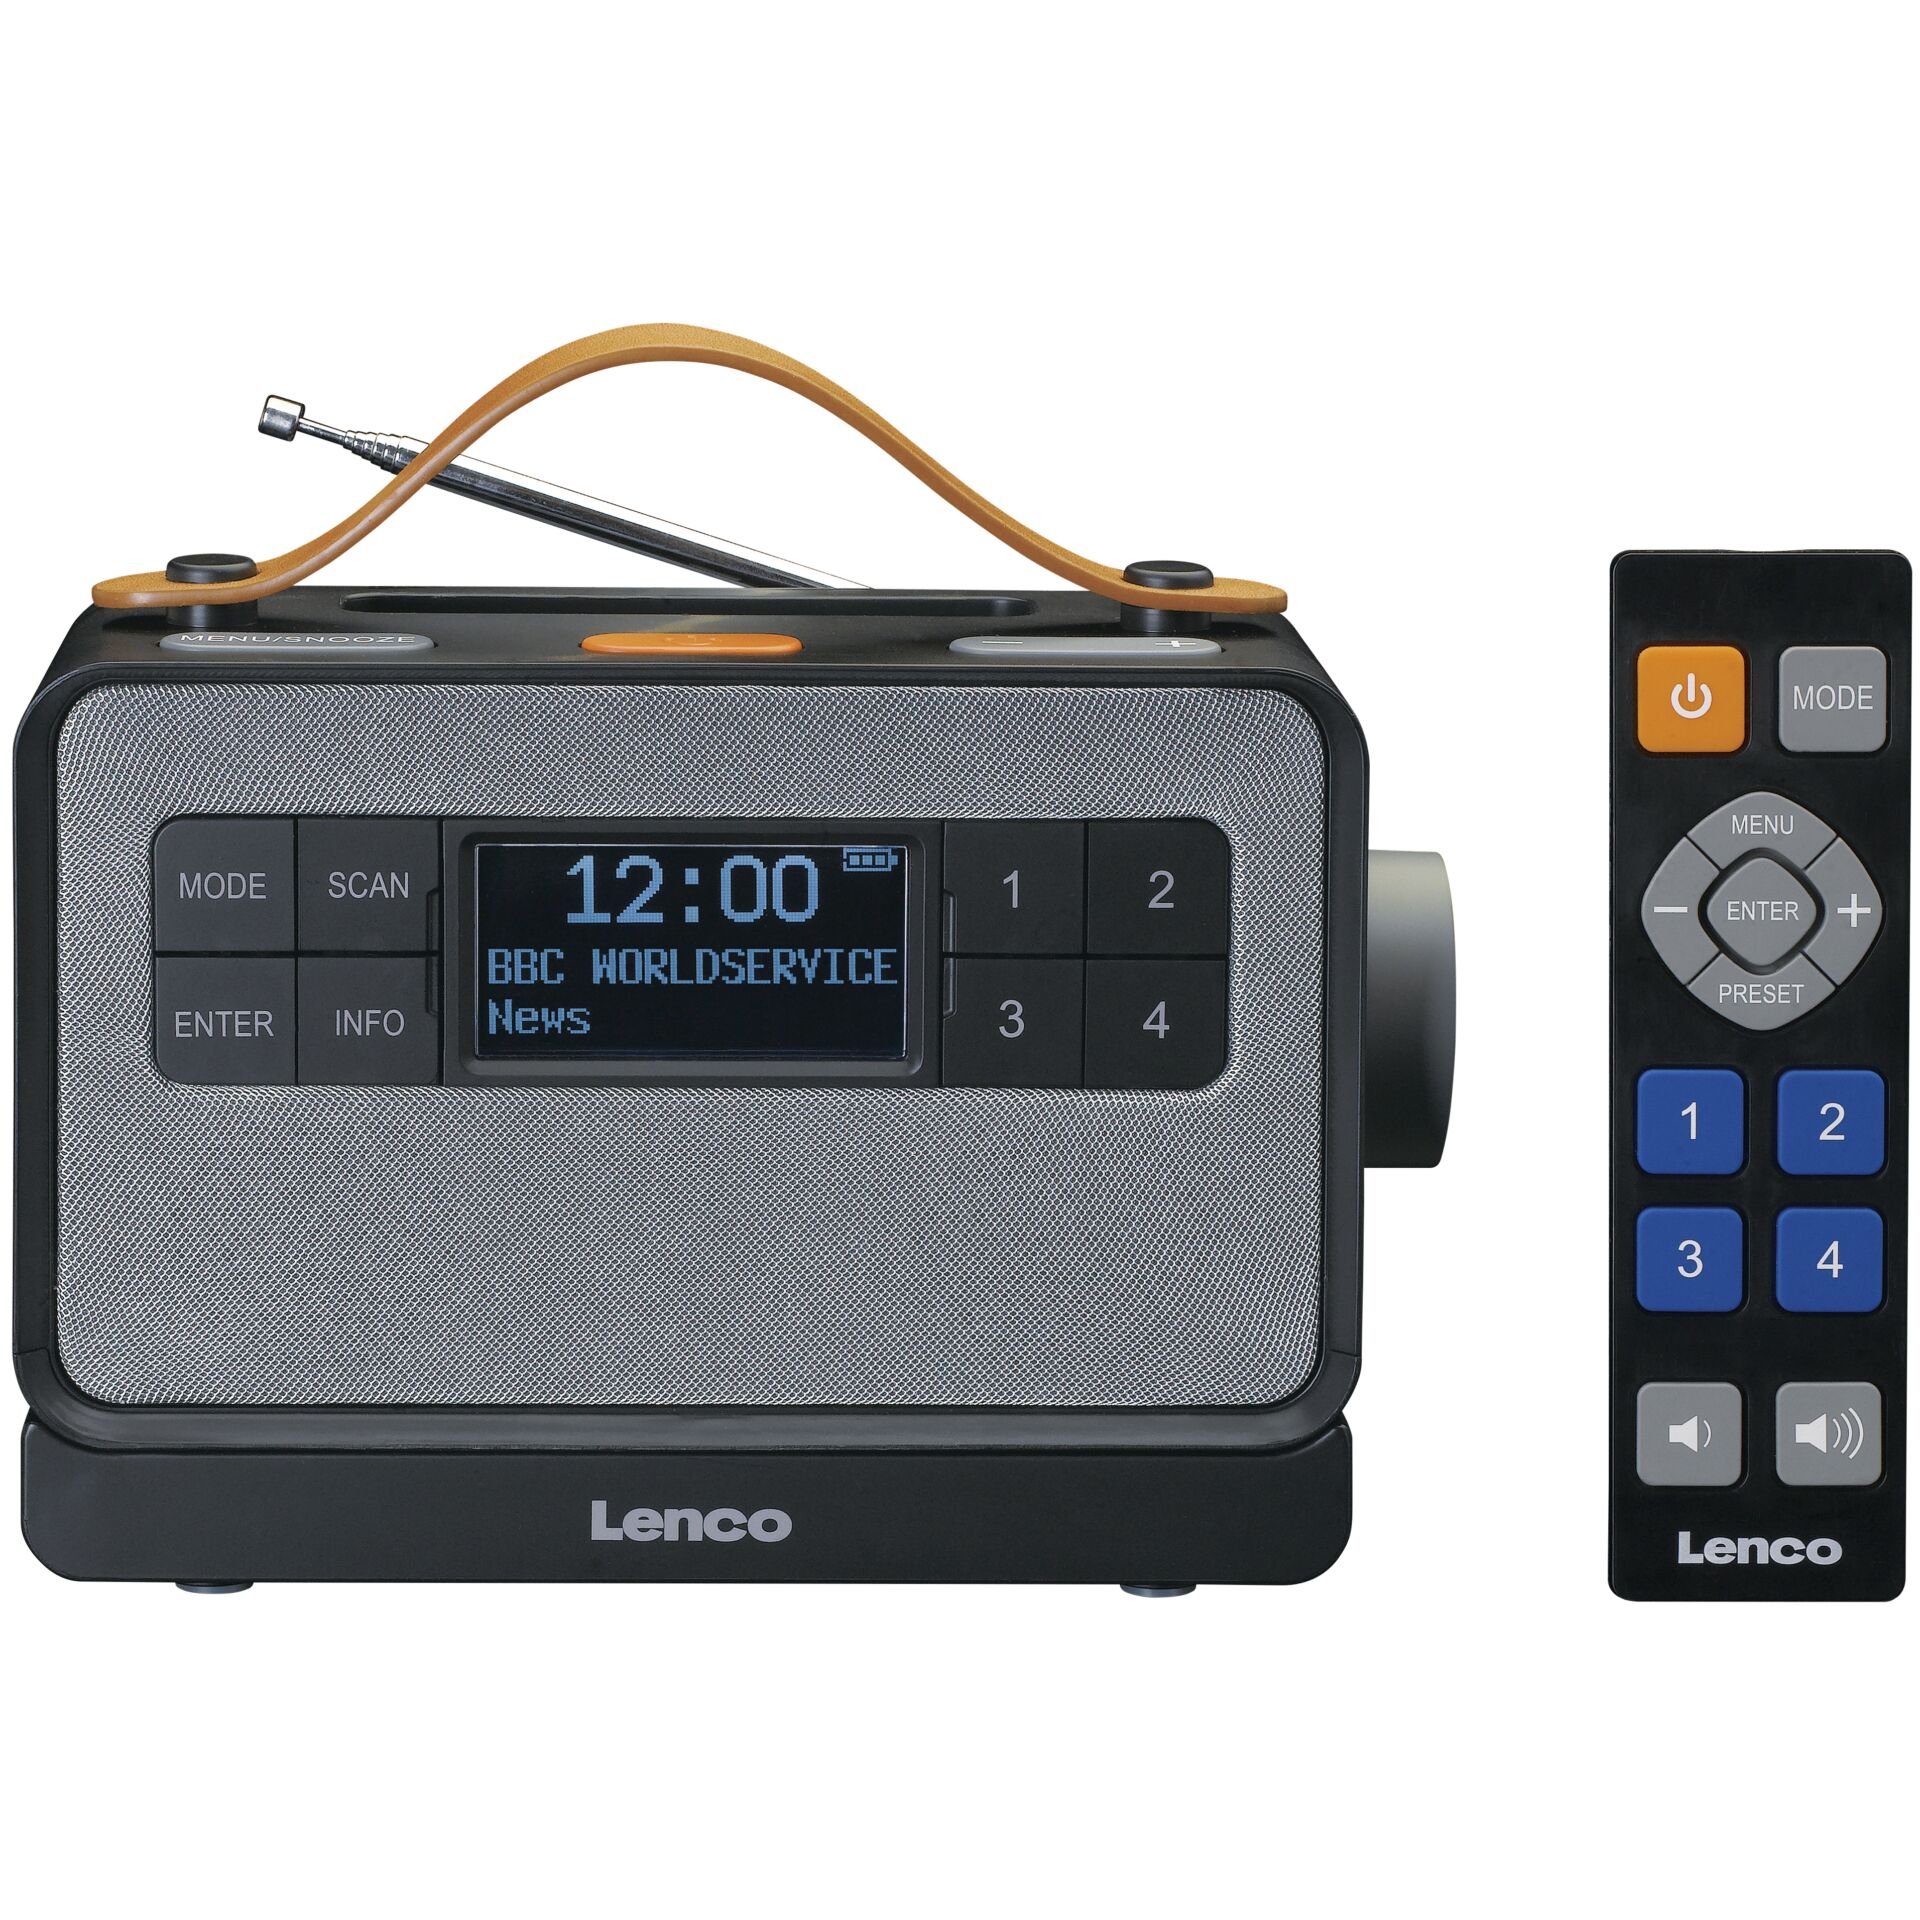 schwarz -Lenco (PDR-065BK) Hardware/Electronic -PDR-065 Lenco